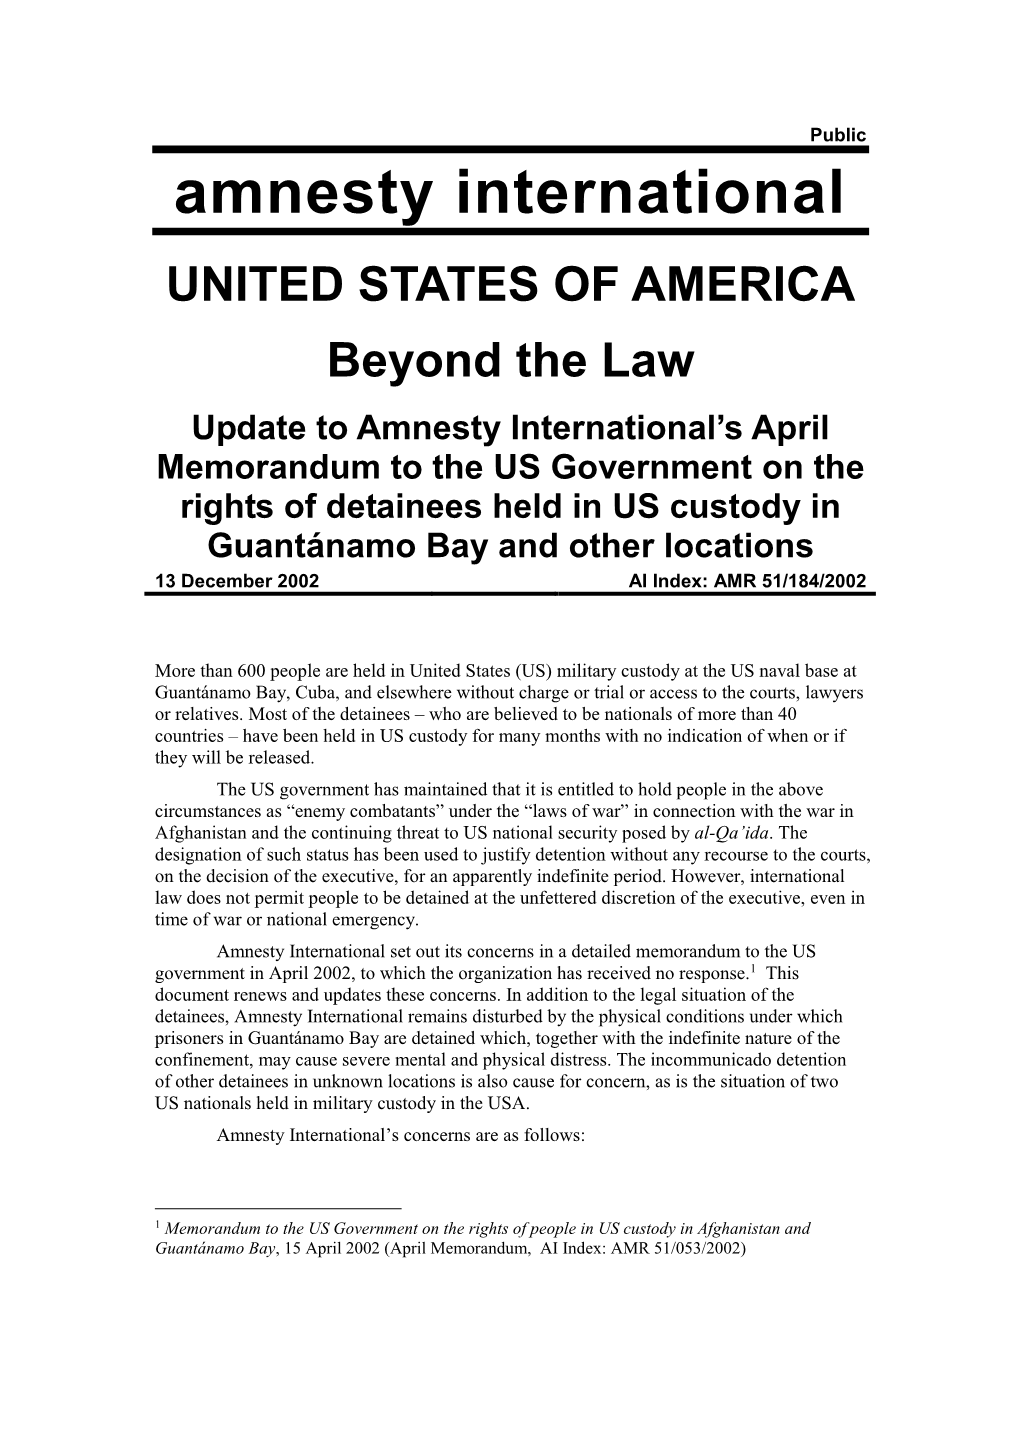 Update to Amnesty International's April Memorandum to the US